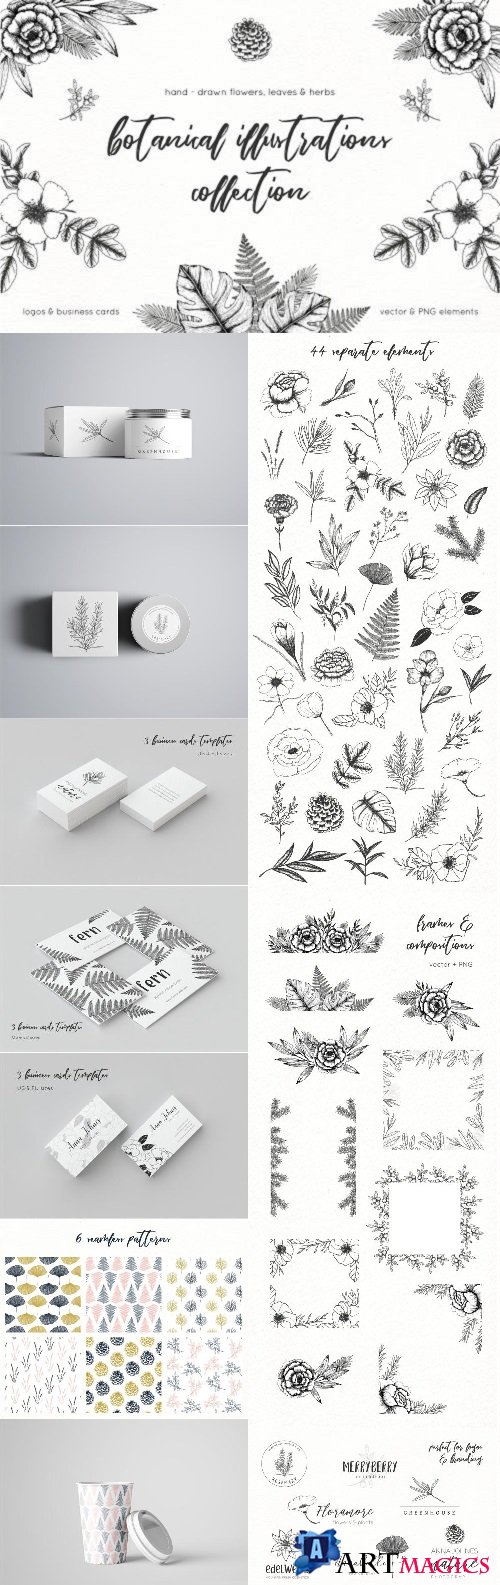 Botanical Illustrations Pack - 2295310